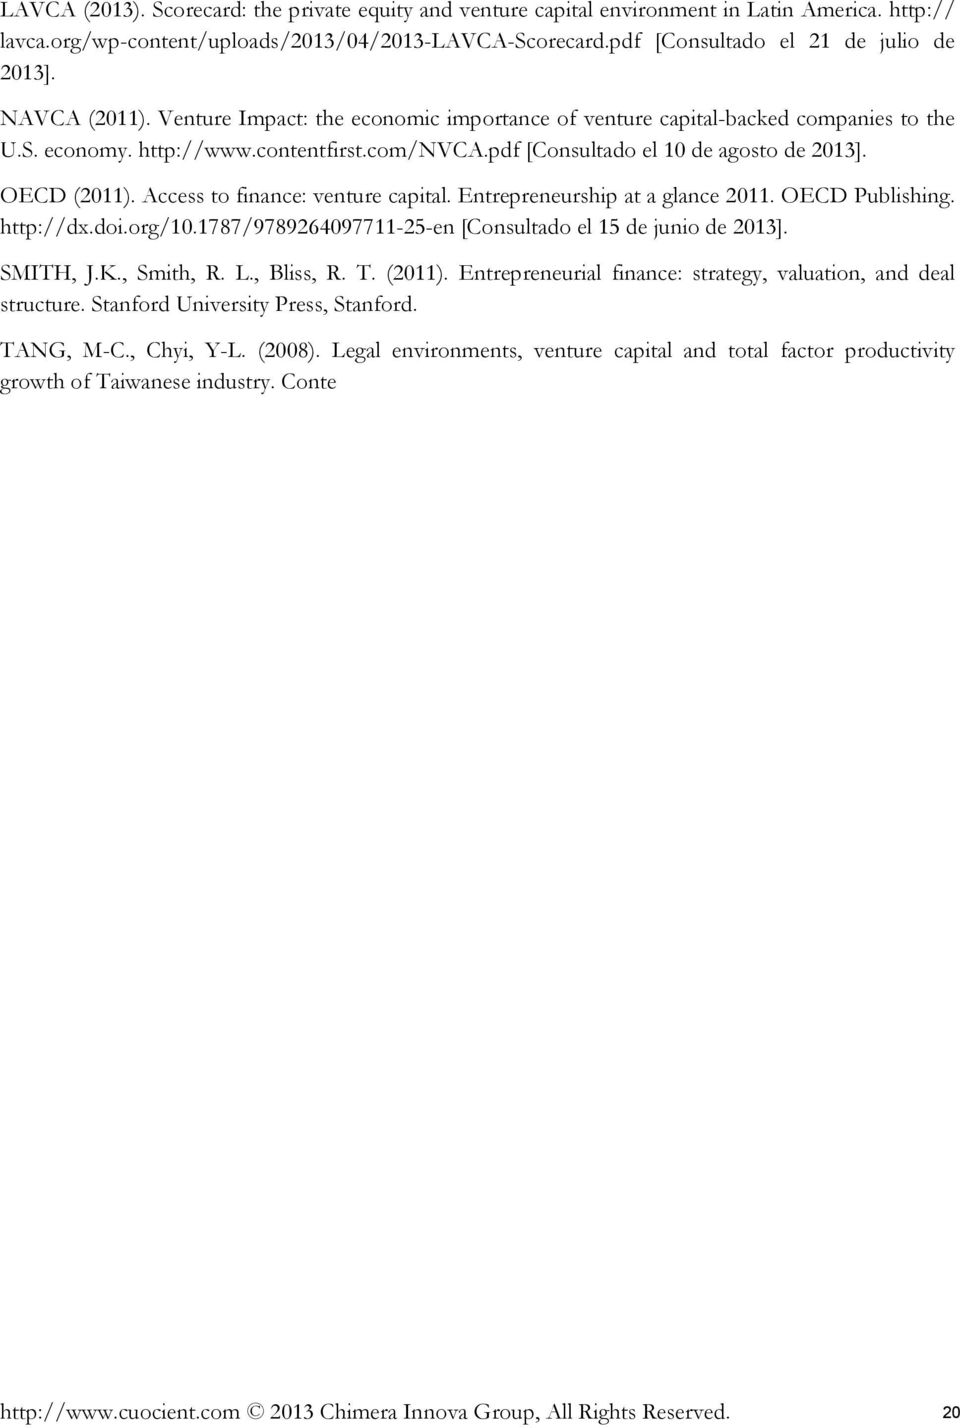 Access to finance: venture capital. Entrepreneurship at a glance 2011. OECD Publishing. http://dx.doi.org/10.1787/9789264097711-25-en [Consultado el 15 de junio de 2013]. SMITH, J.K., Smith, R. L.